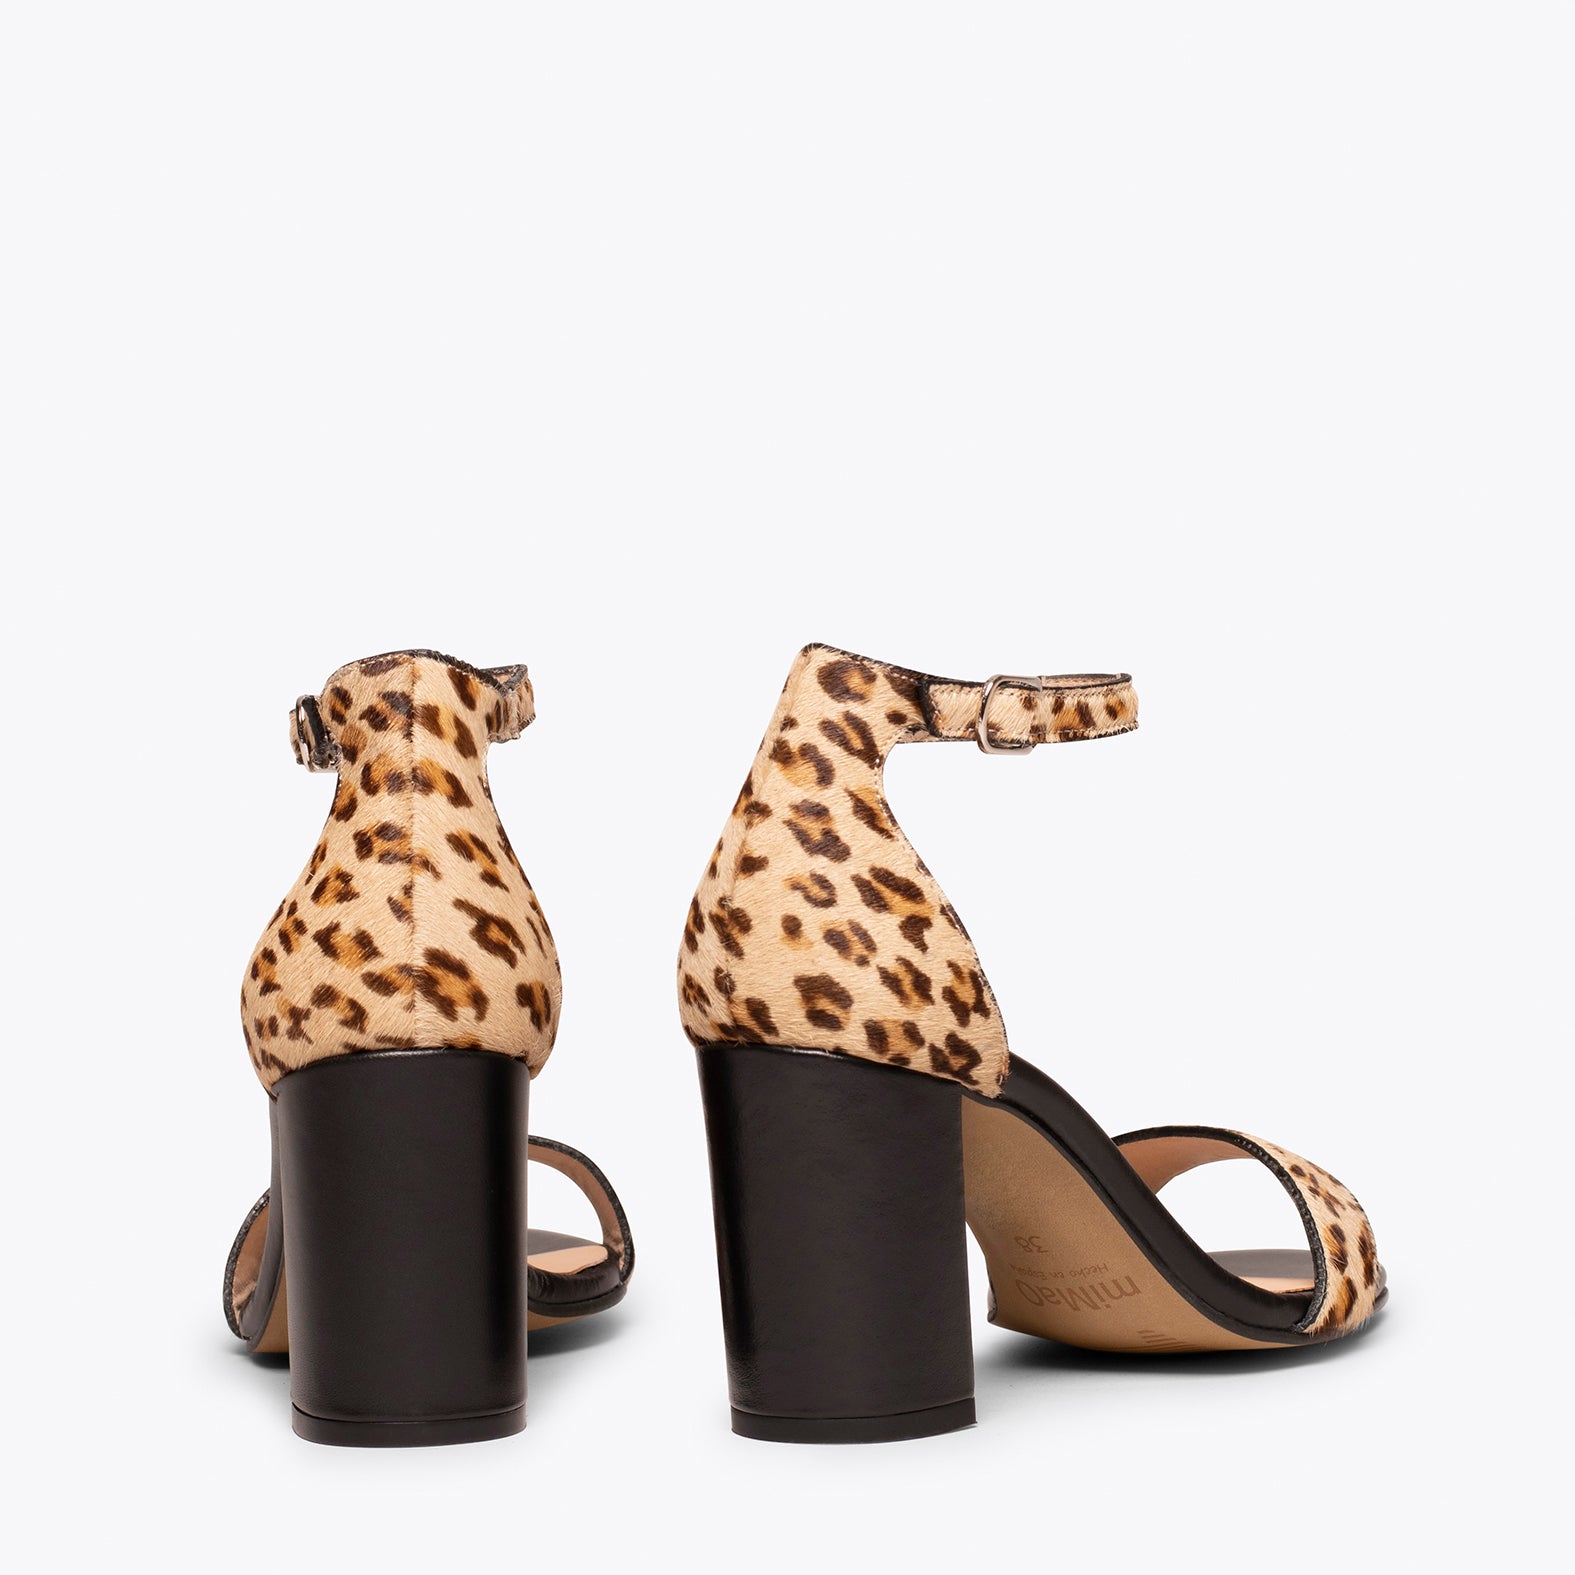 SAVANNAH – LEOPARD animal print high heel sandal